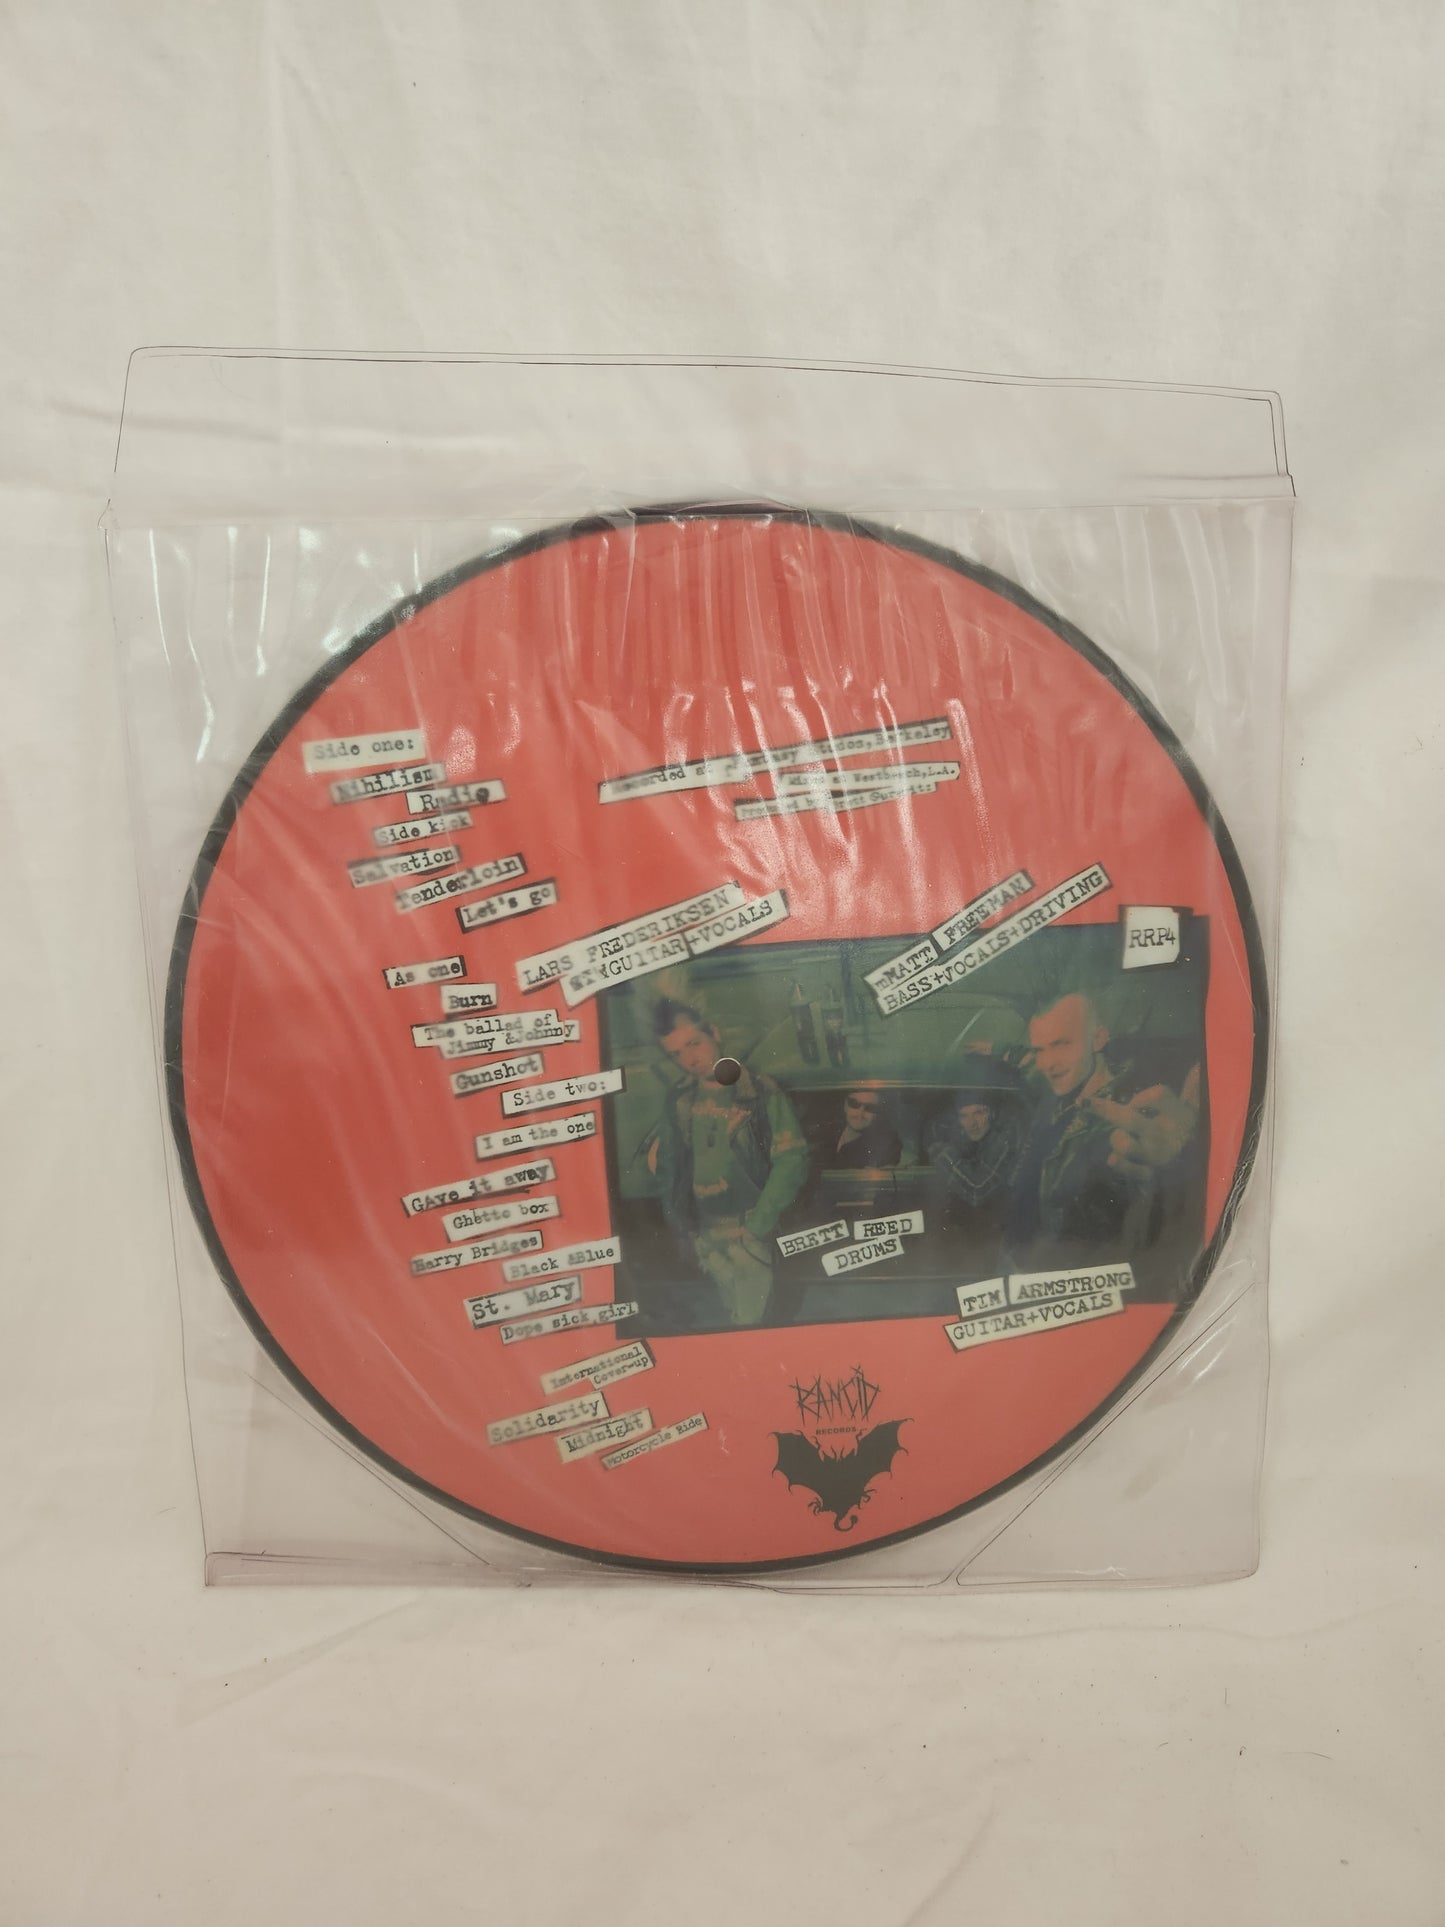 Rancid - Let's Go 10th Anniversary Picture Vinyl LP